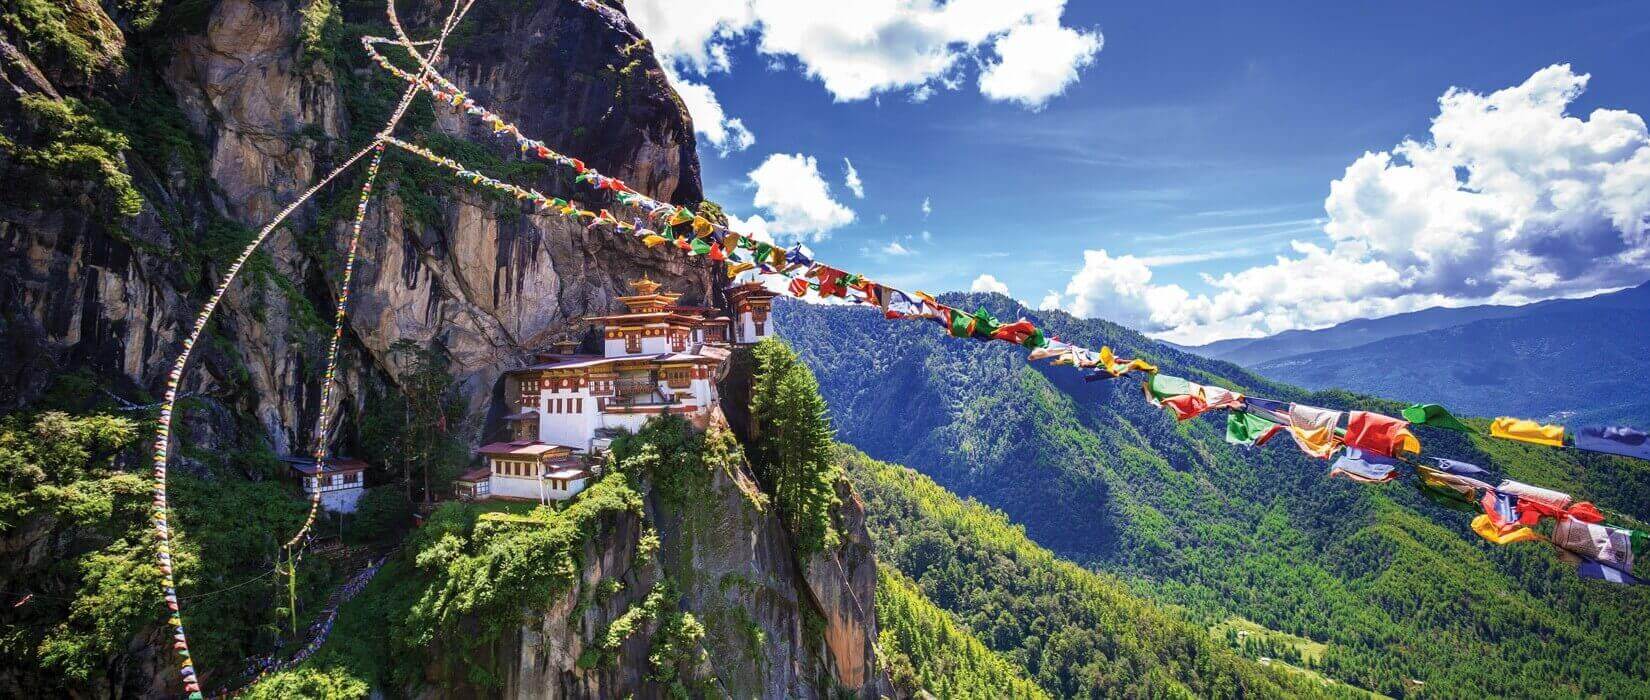 Dragon Kingdom Tour - Bhutan